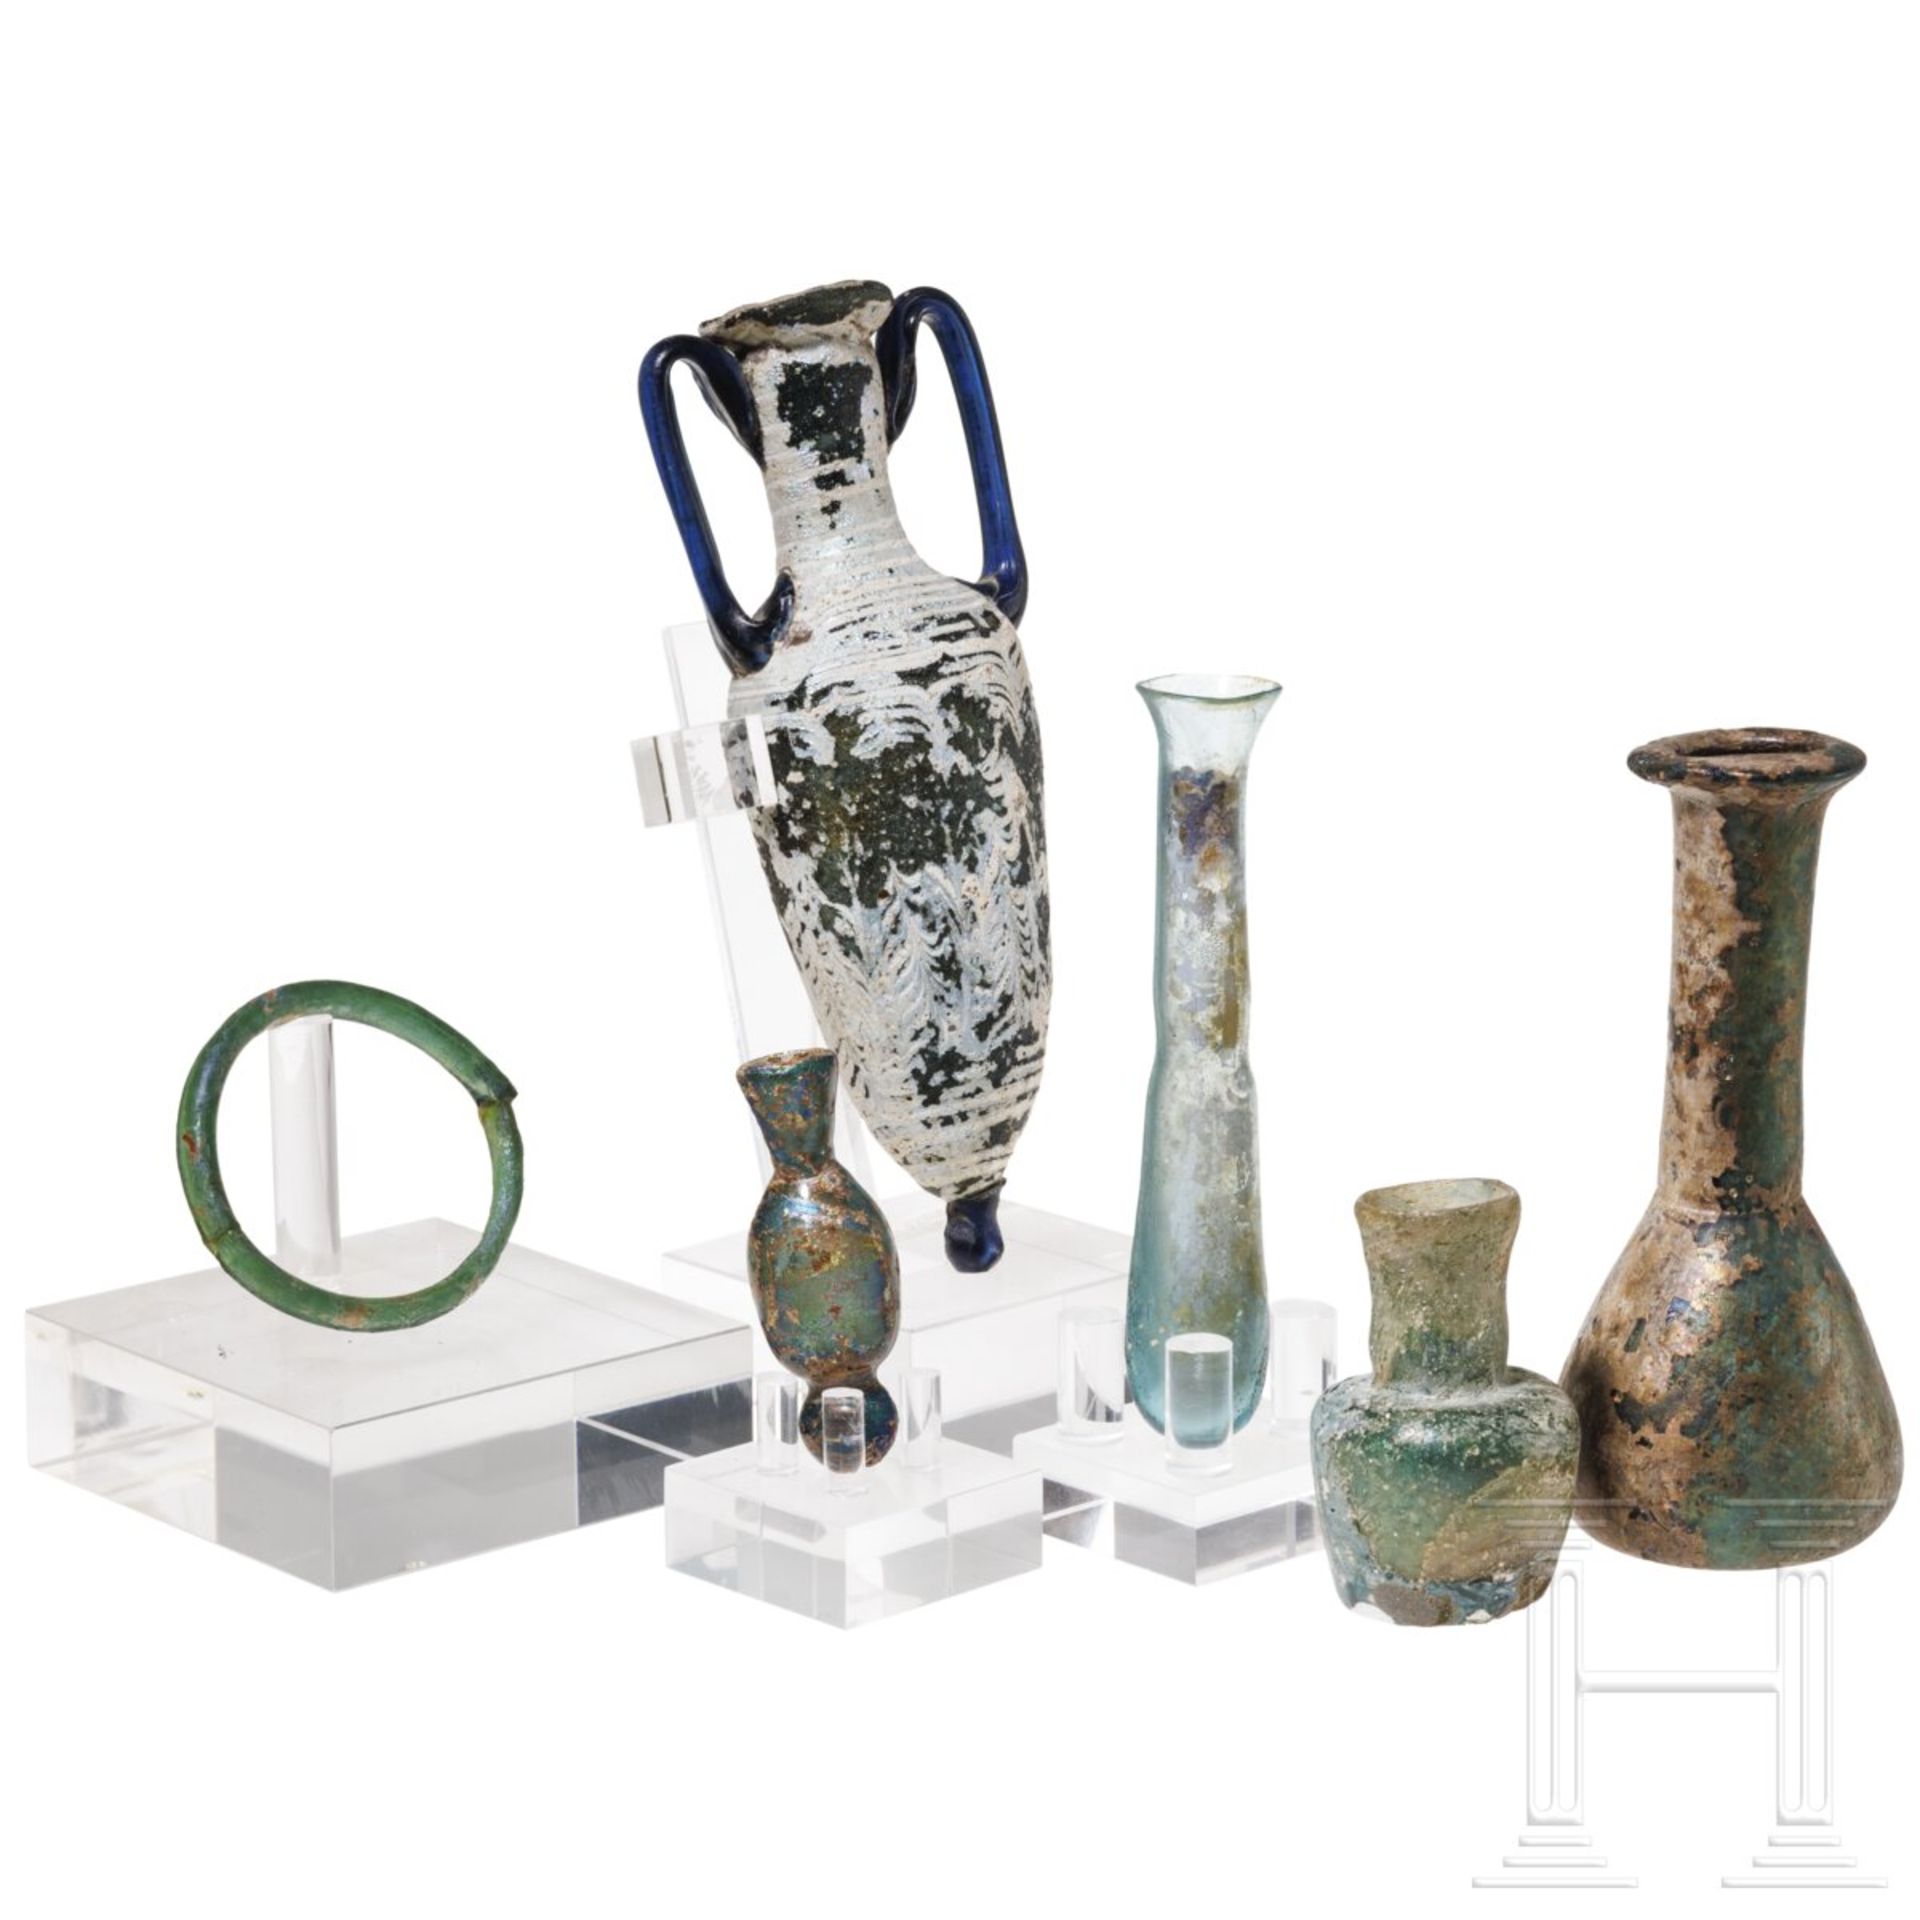 Fünf antike Glasgefäße und ein Glasarmreif, 2. Jhdt. v. Chr. - 6. Jhdt. n. Chr. - Image 2 of 3